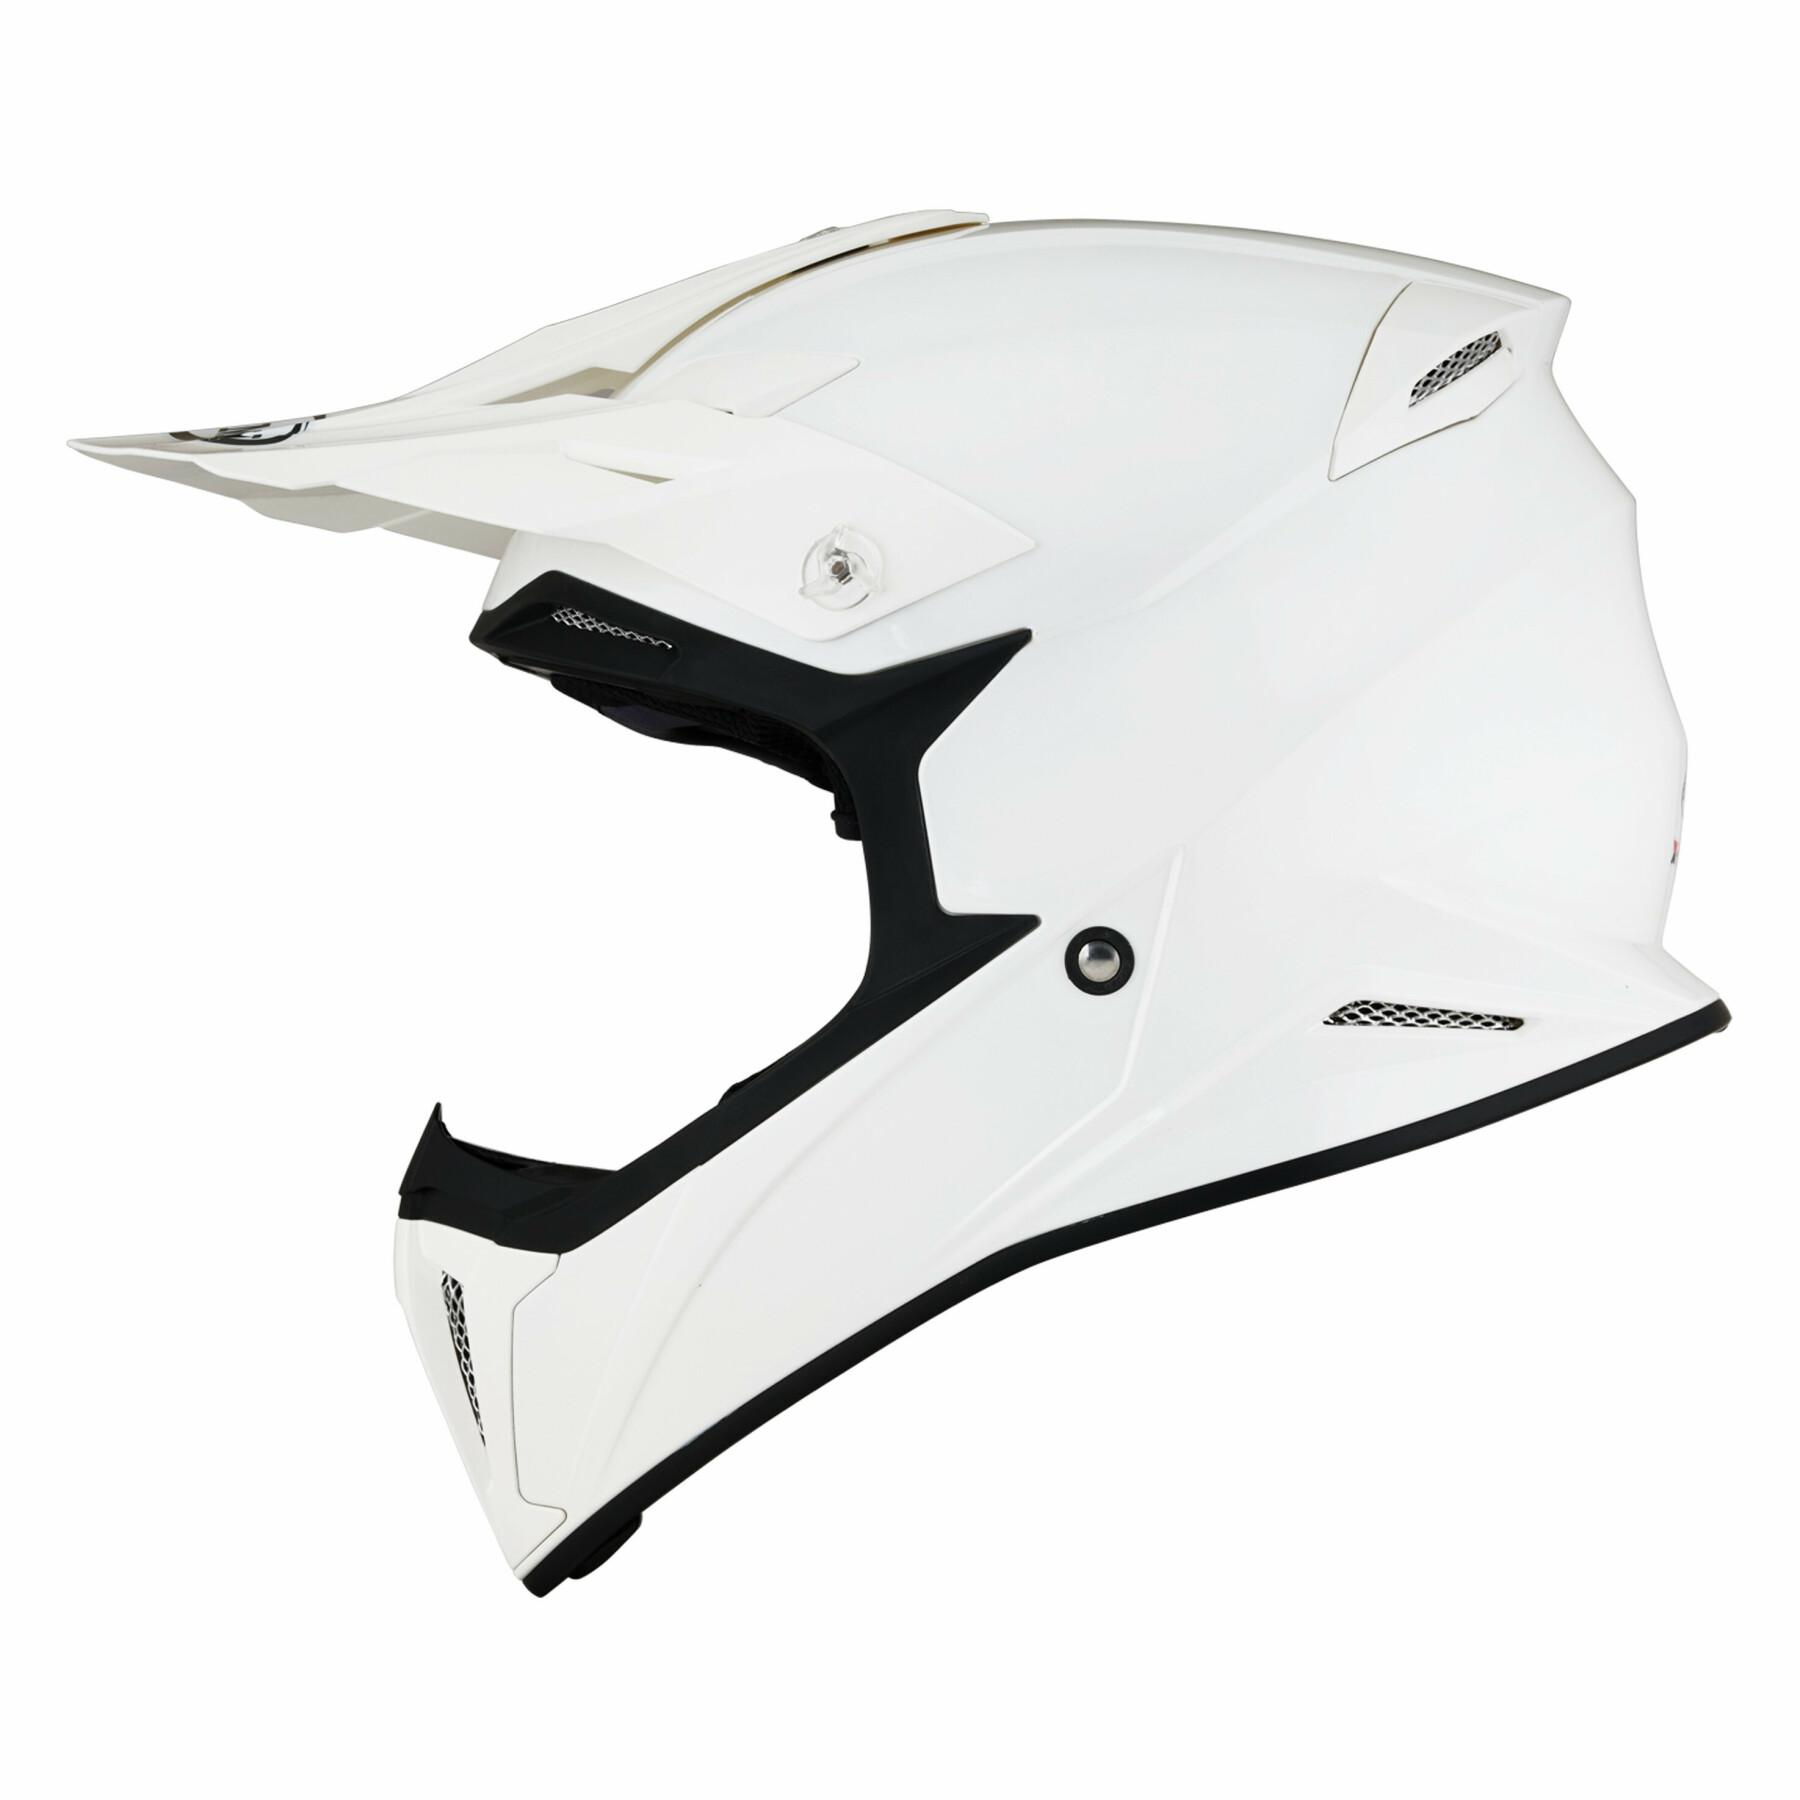 Cross helmet Suomy x-wing plain